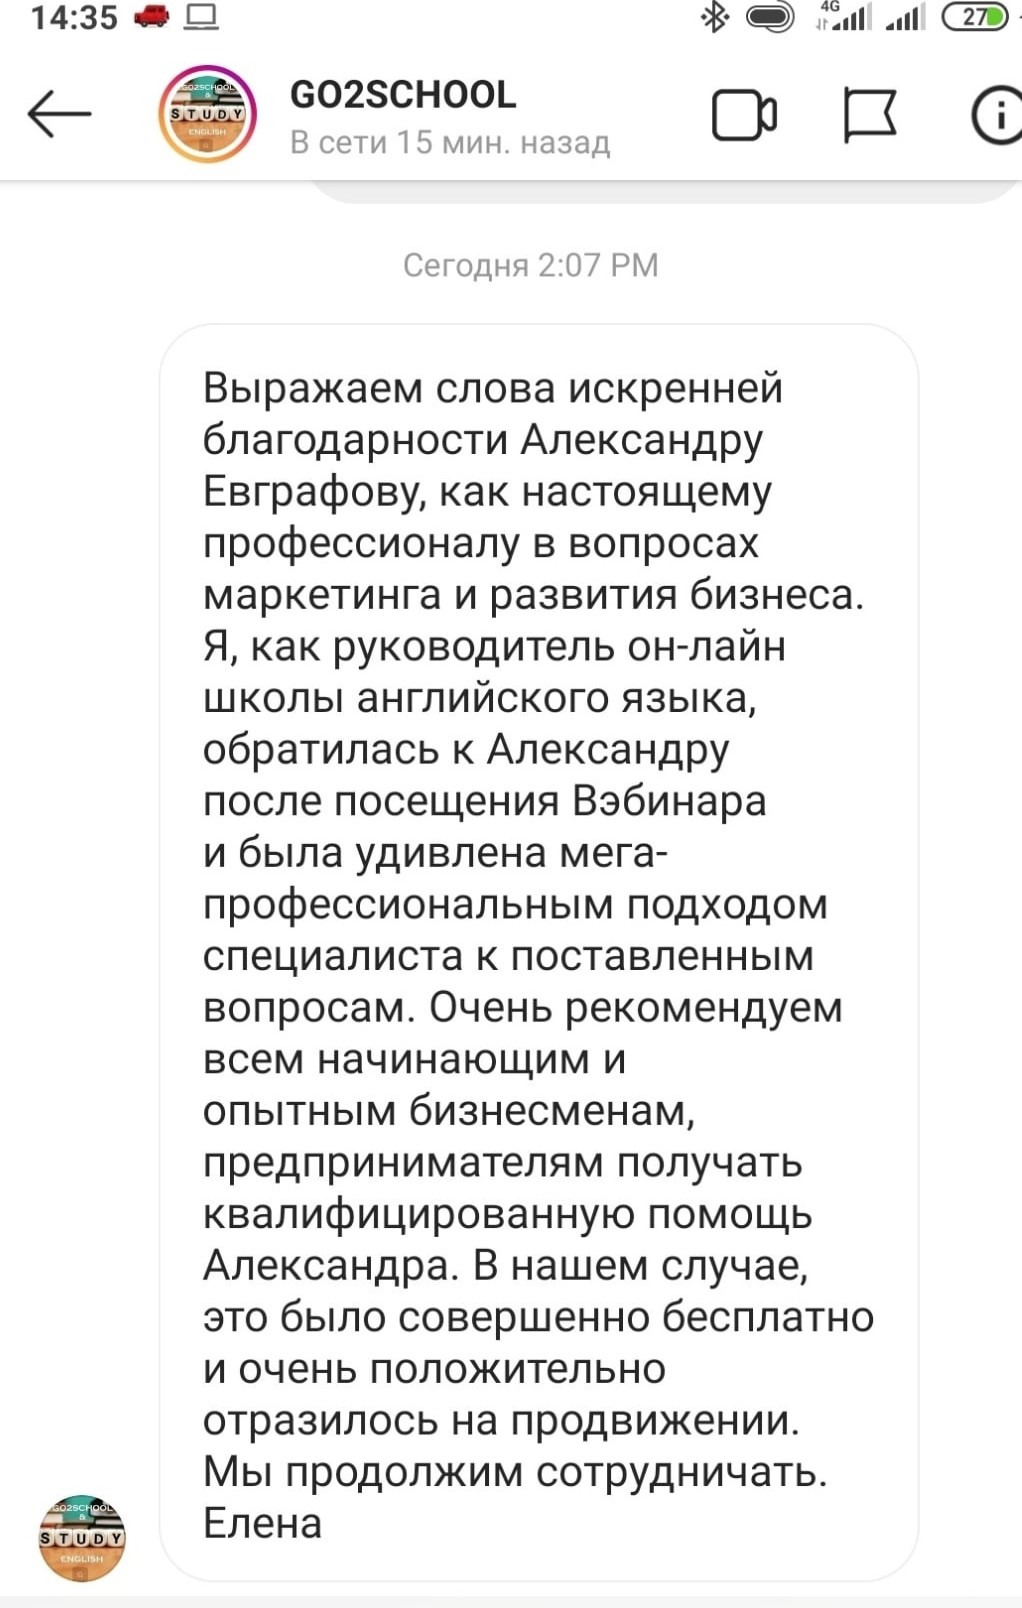 Отзывы Александр Евграфов